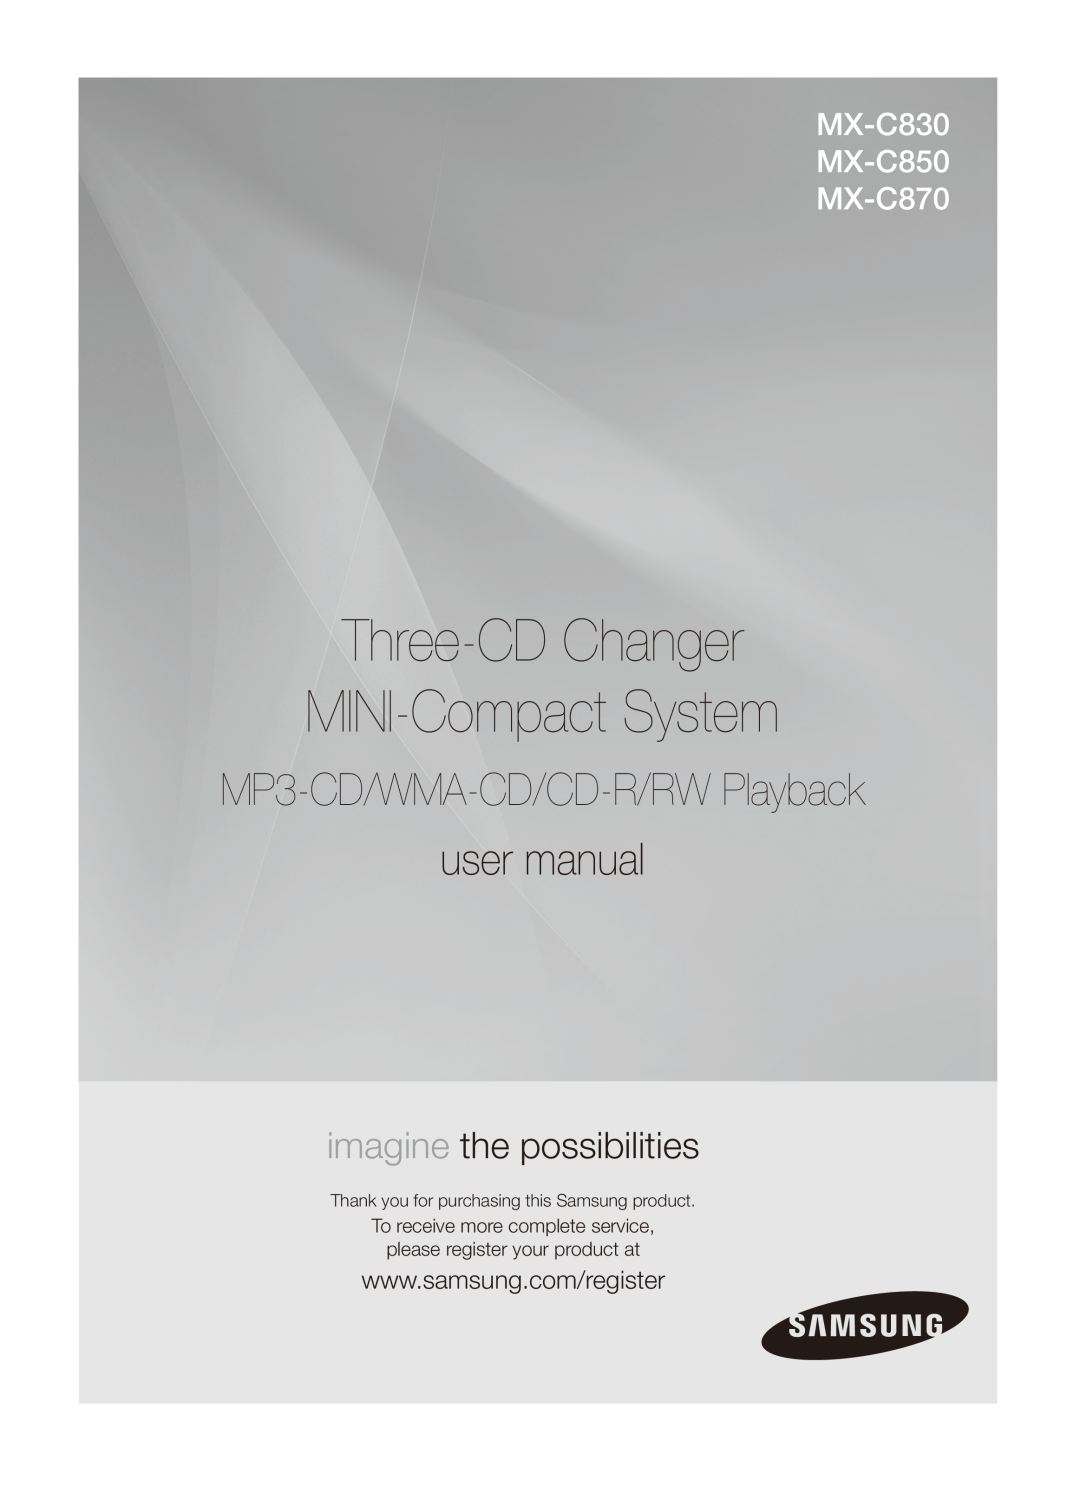 Samsung AH68-02265X user manual Three-CDChanger MINI-CompactSystem, imagine the possibilities, MX-C830 MX-C850 MX-C870 